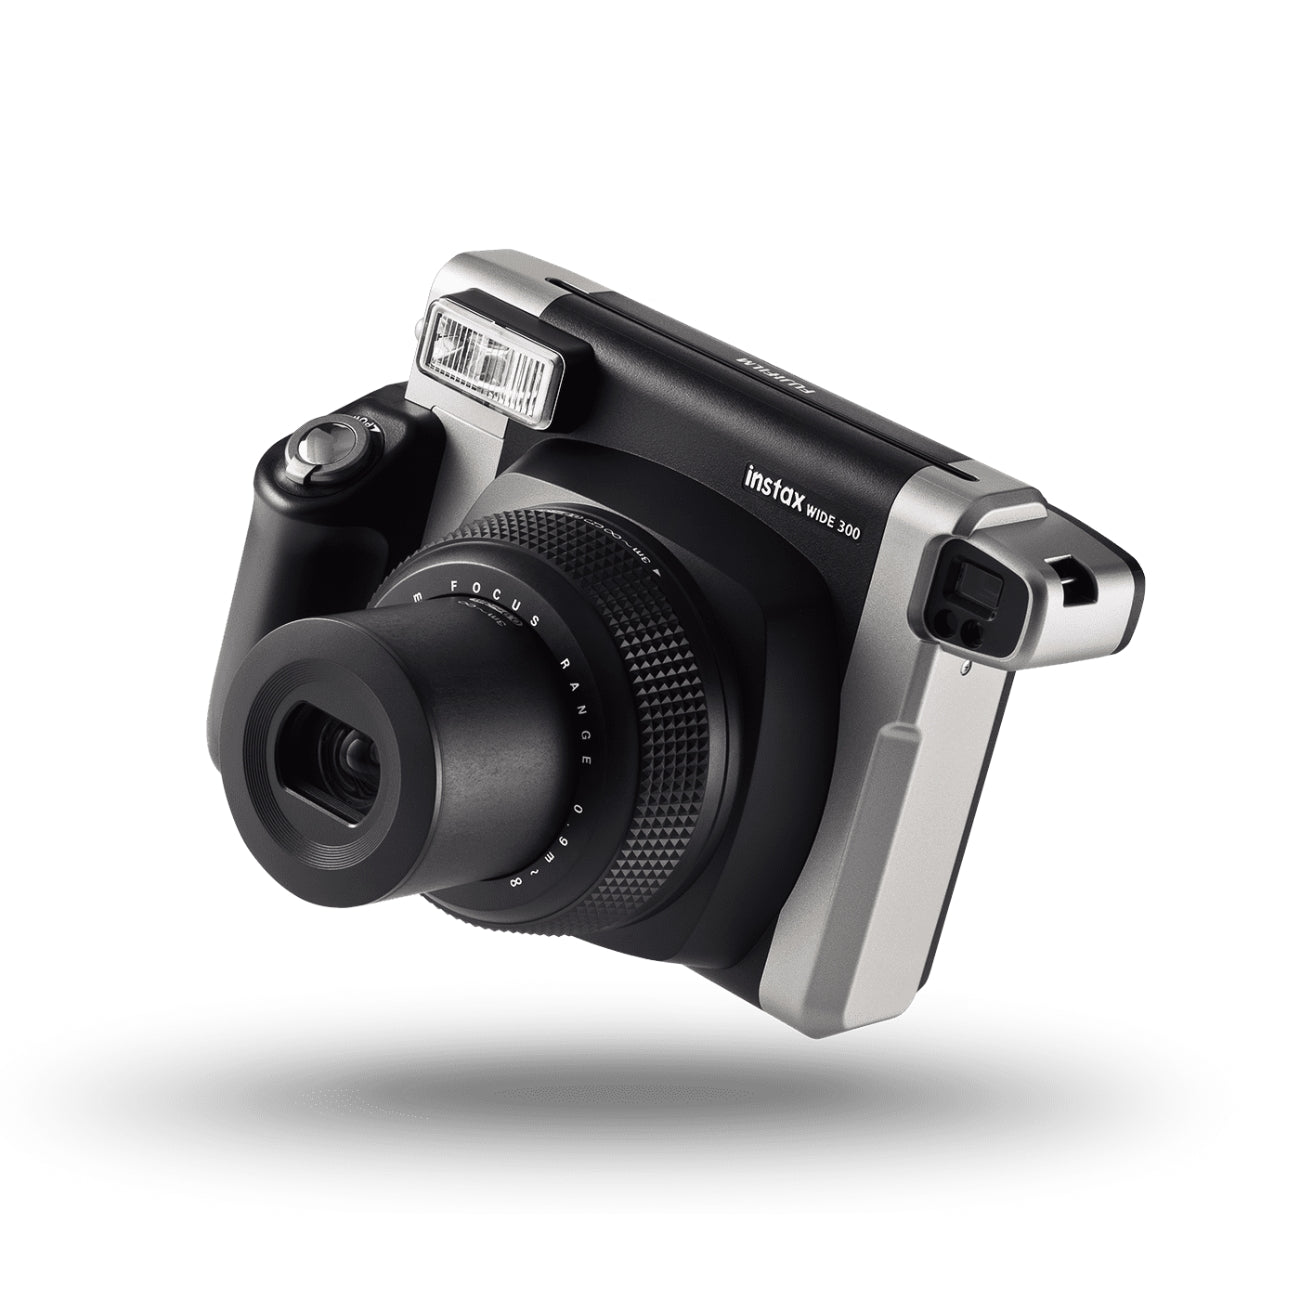 Fuji Instax 210 Instant Film Camera Review